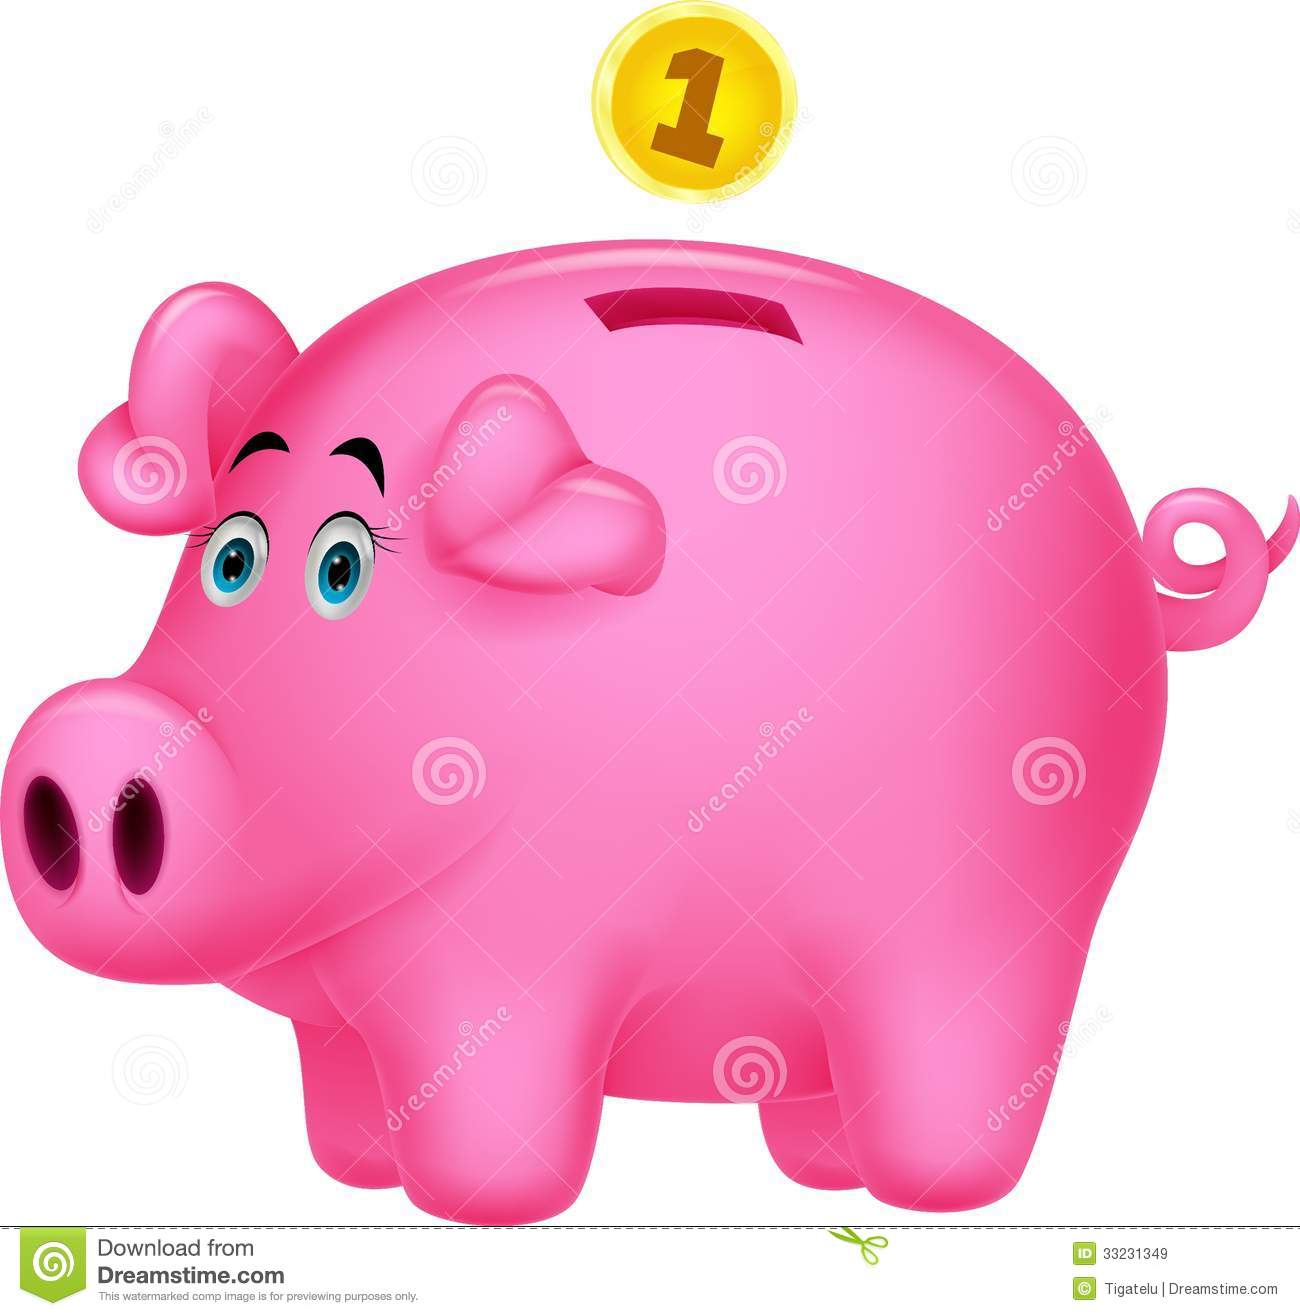 Royalty Free Stock Images  Piggy Bank Cartoon